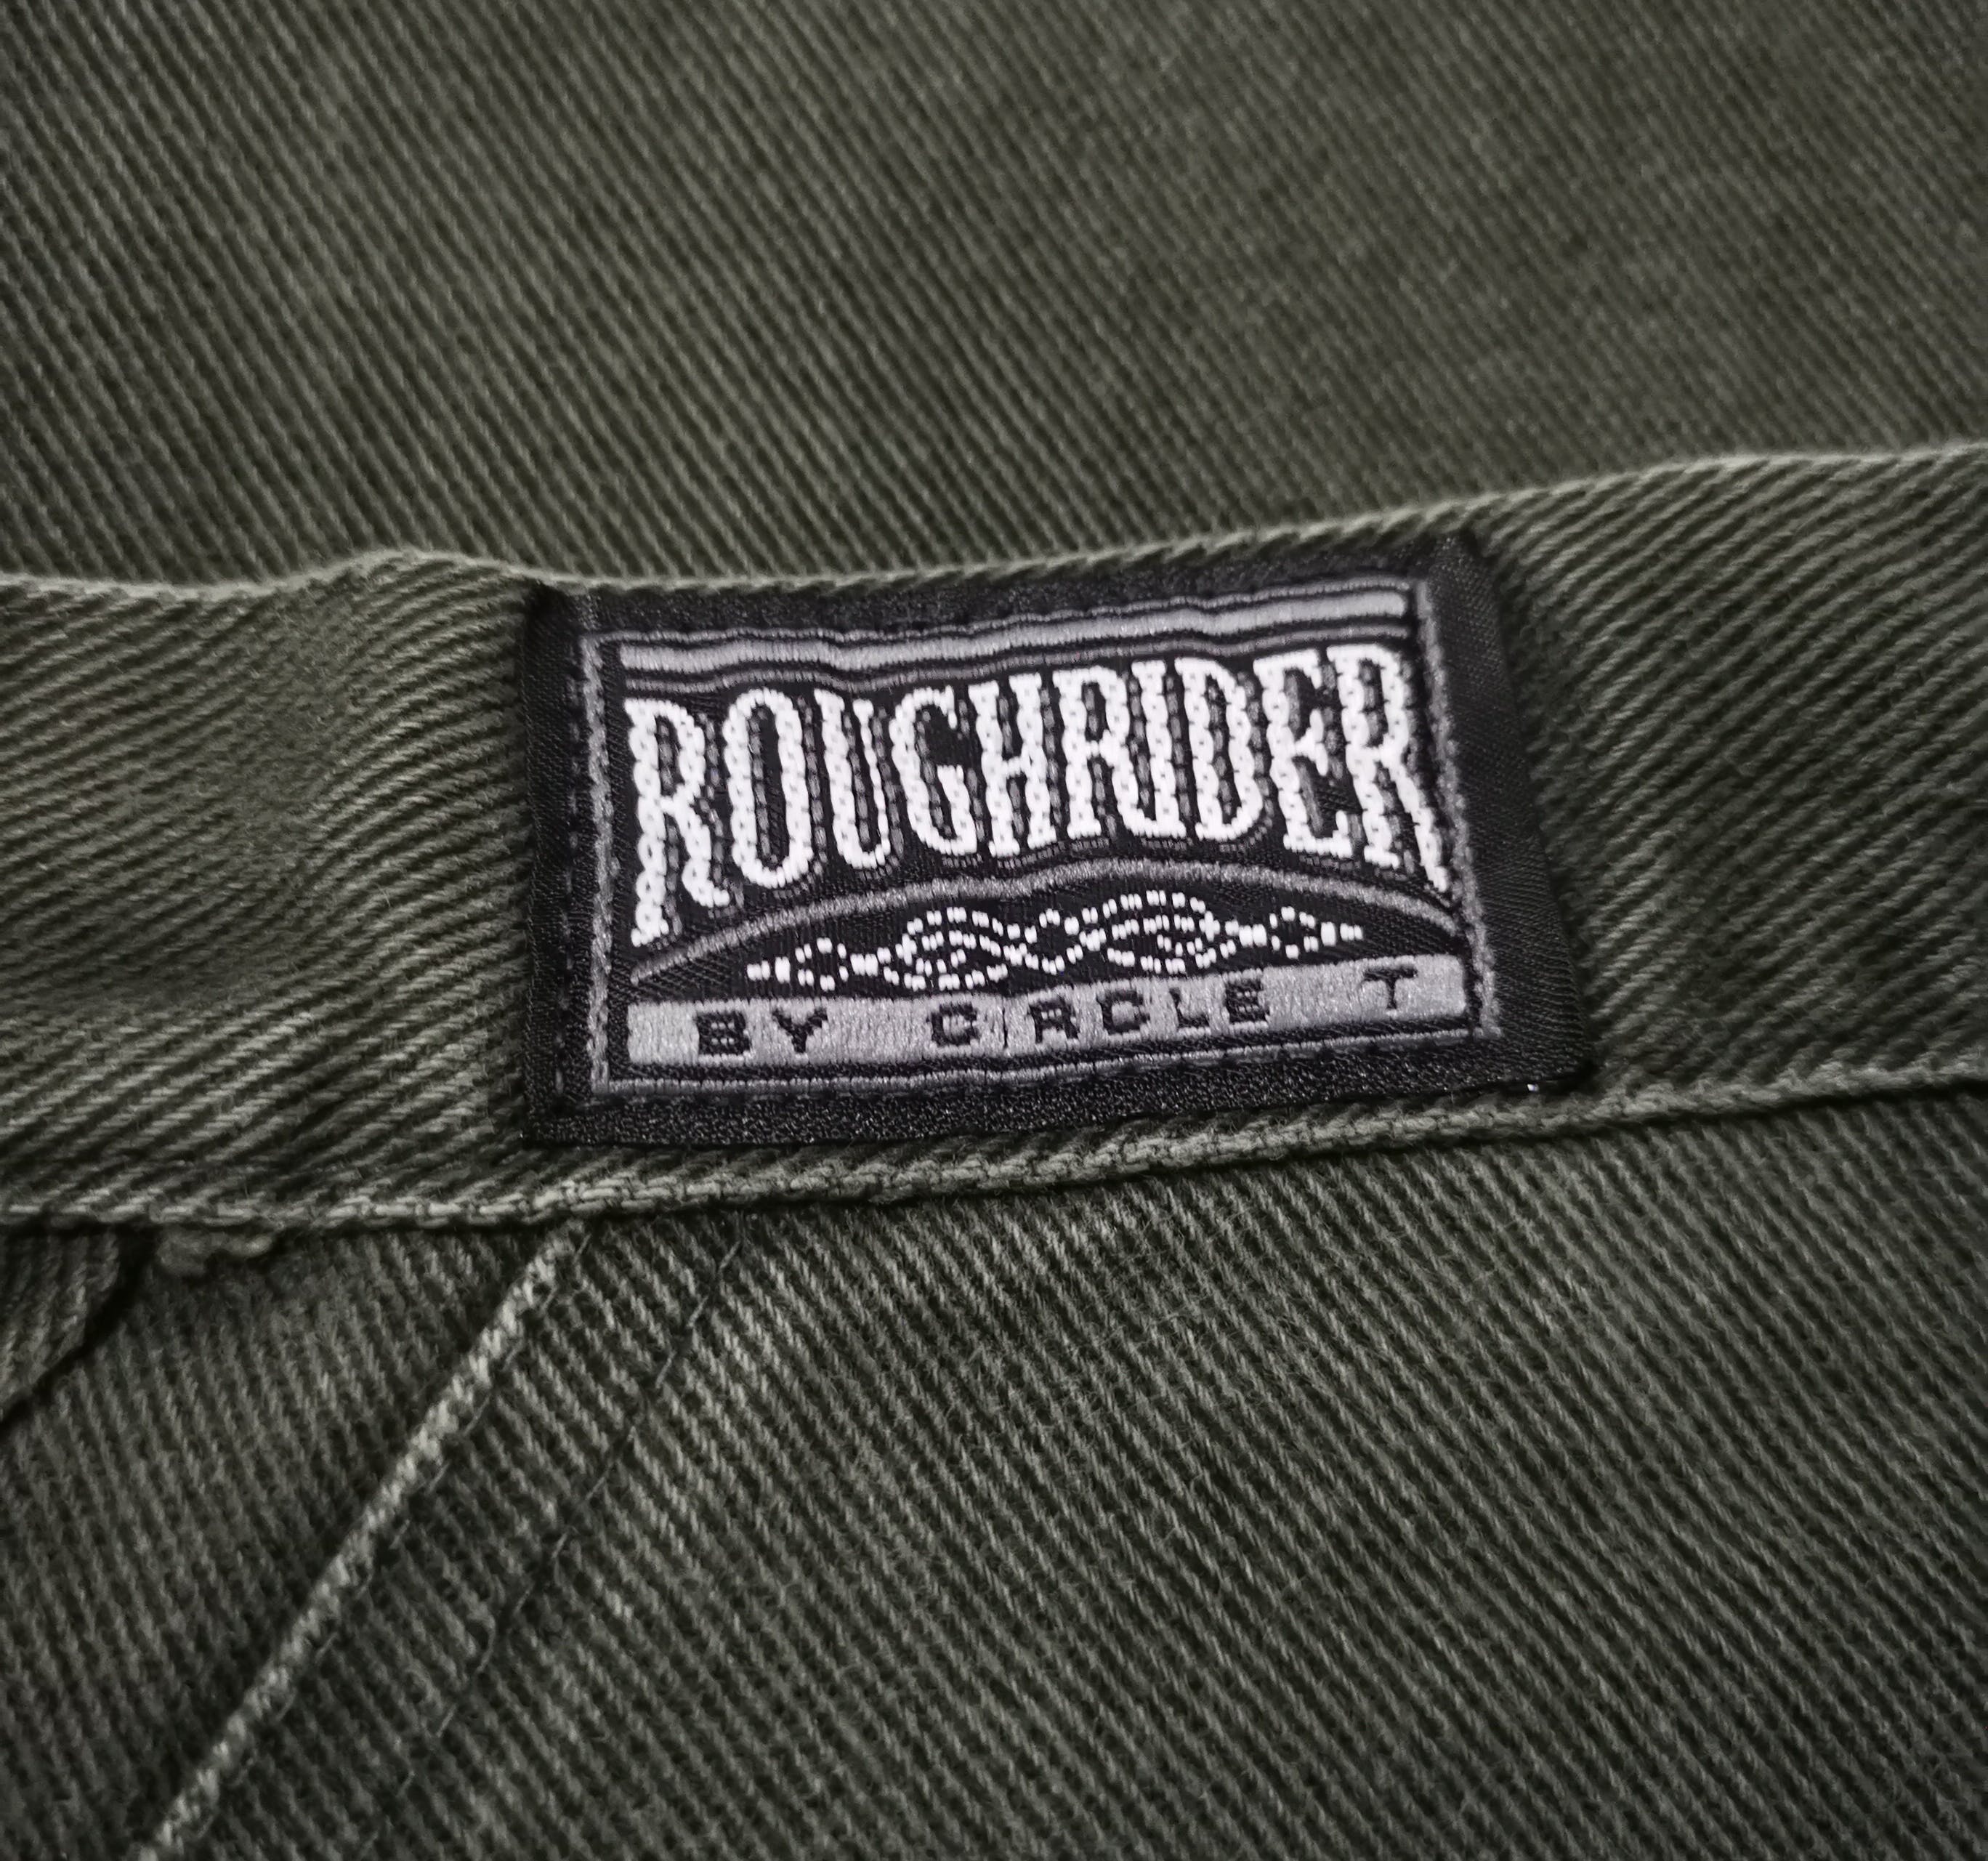 Vintage Roughrider Jeans x Talon Zipper - 5